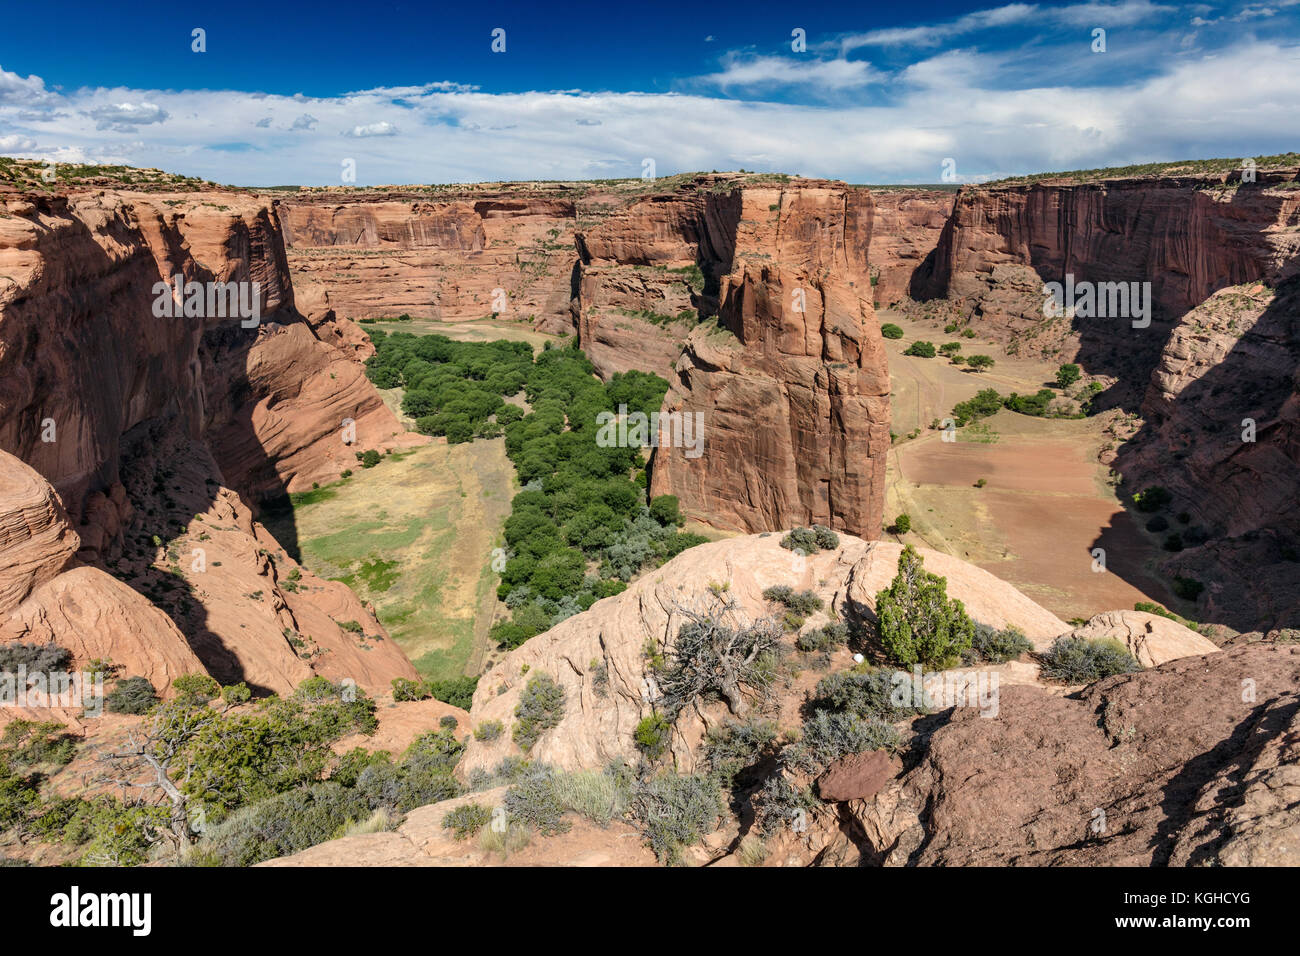 Sandstone Cliffs - Canyon de Chelly National Monument, Arizona Stock Photo